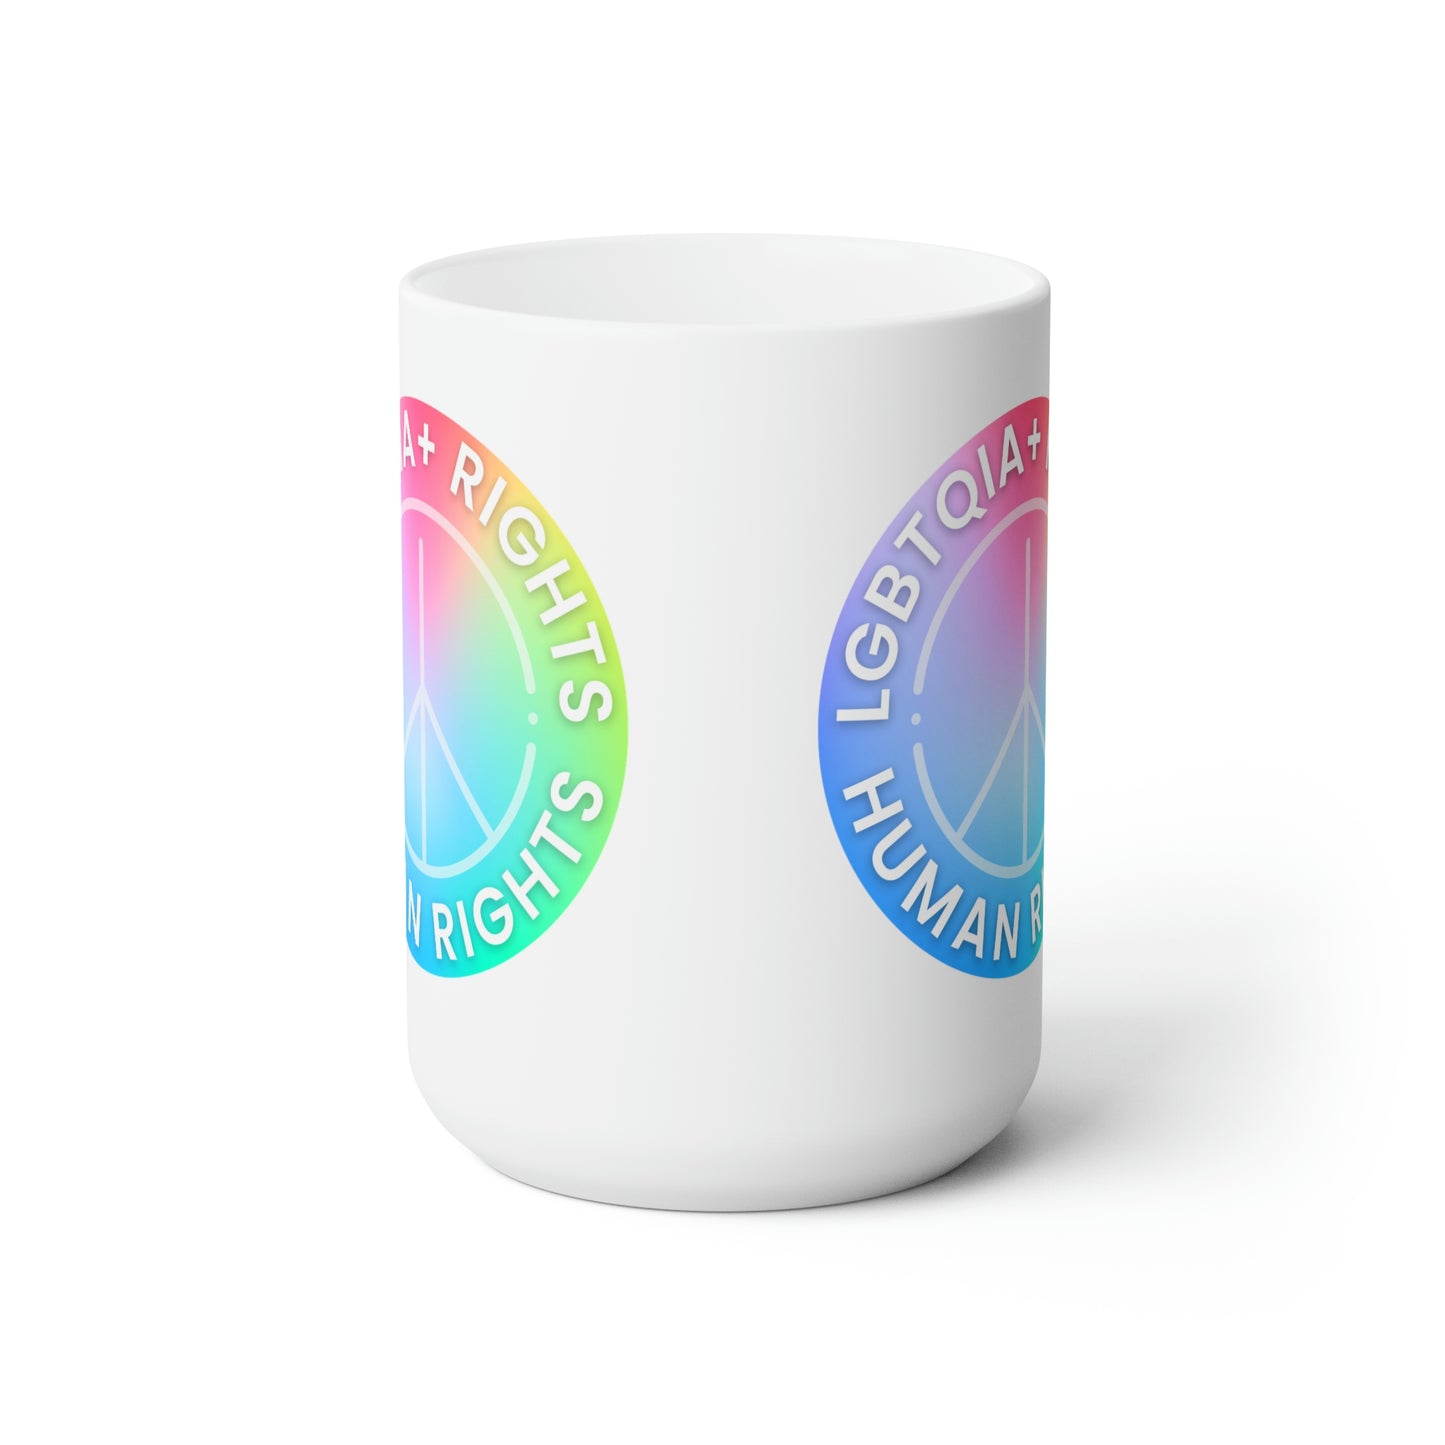 LGBTQIA+ Rights are Human Rights Ceramic Mug 15oz